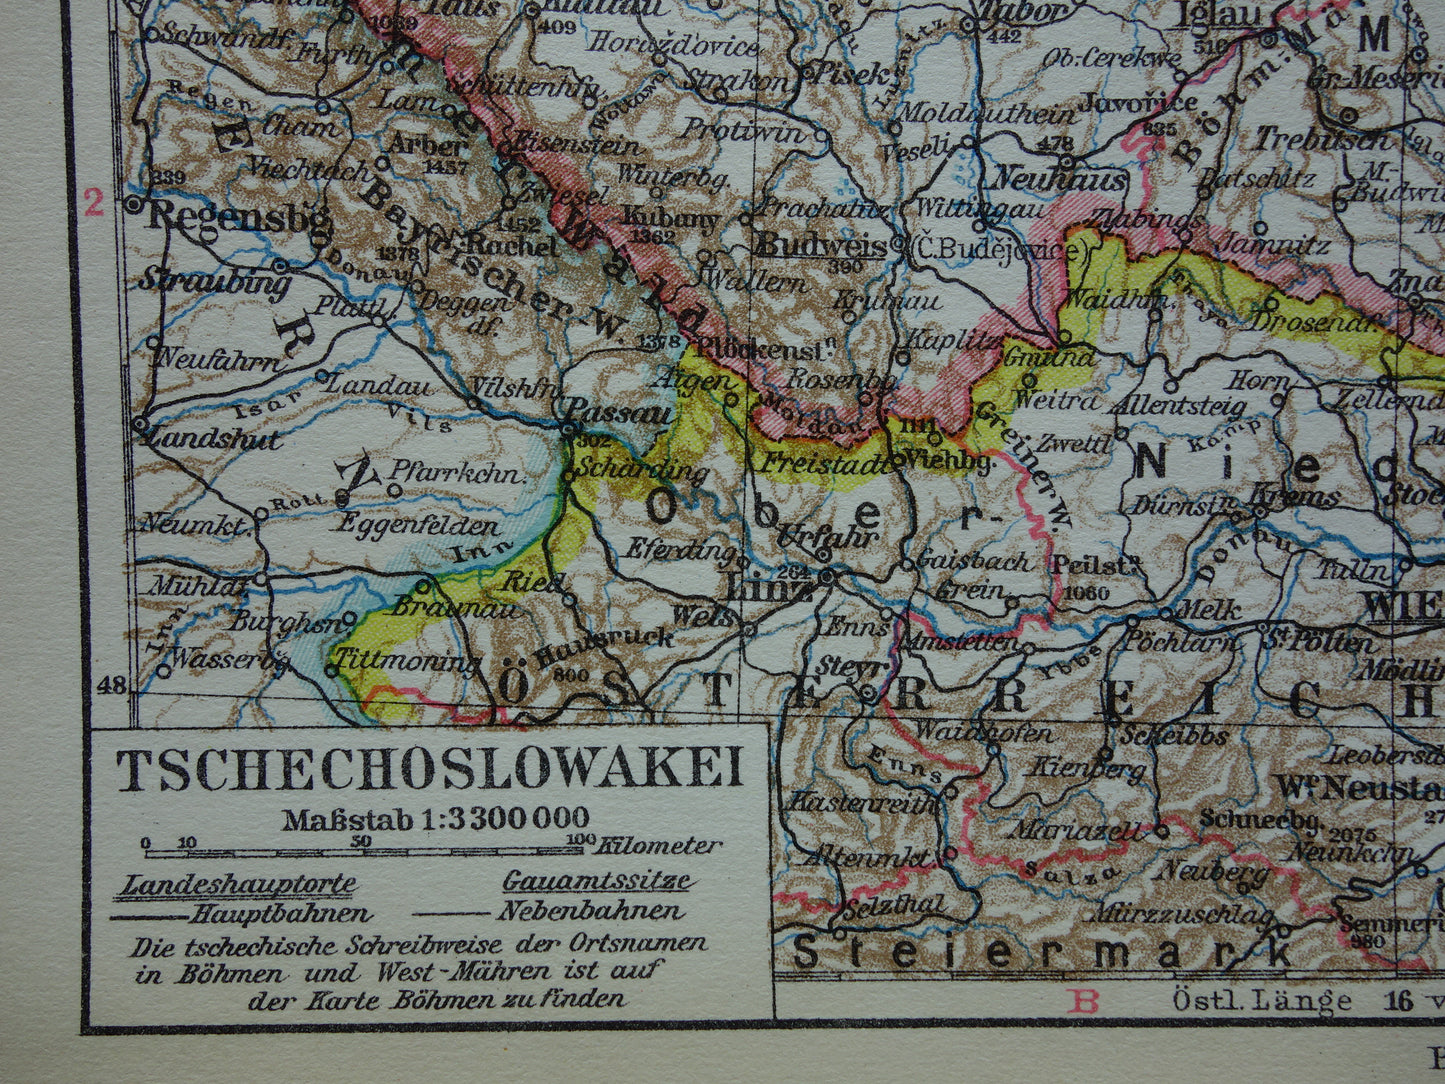 TSJECHOSLOWAKIJE oude kaart van Tsjechië en Slowakije uit 1928 originele kleine vintage landkaart Praag Bratislava